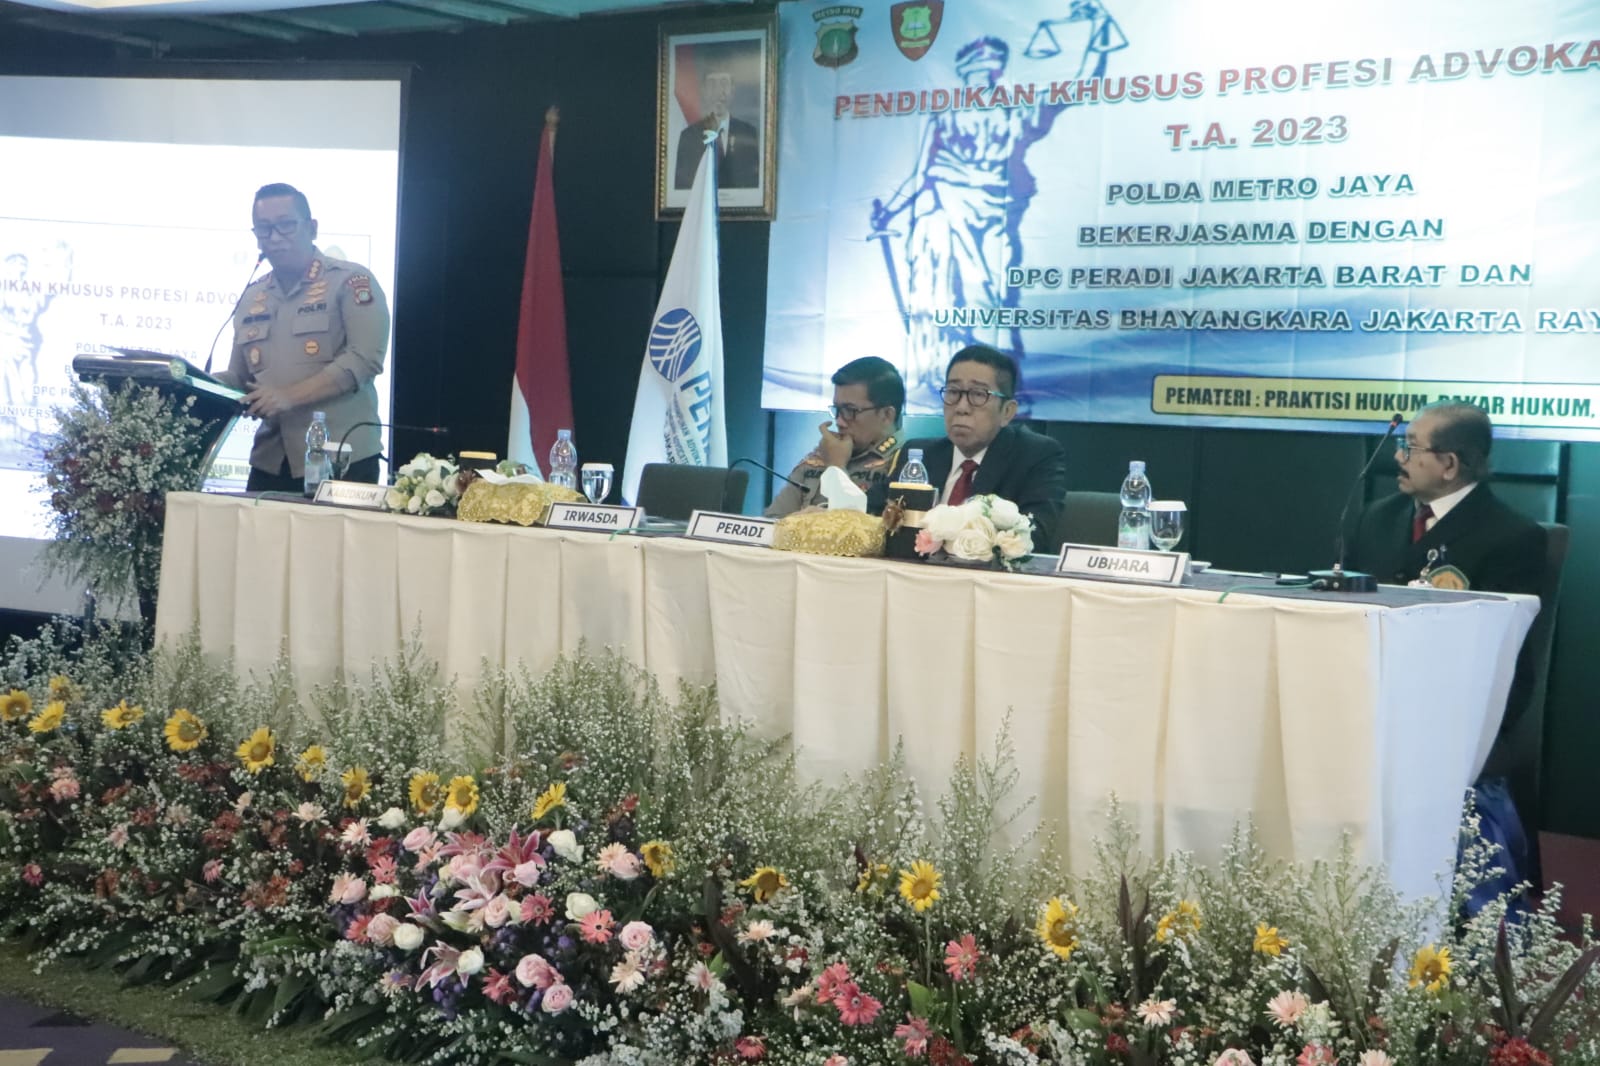 Bidang Hukum Polda Metro Jaya Selenggarakan Pendidikan Khusus Profesi Advokat (PKPA) T.A 2023